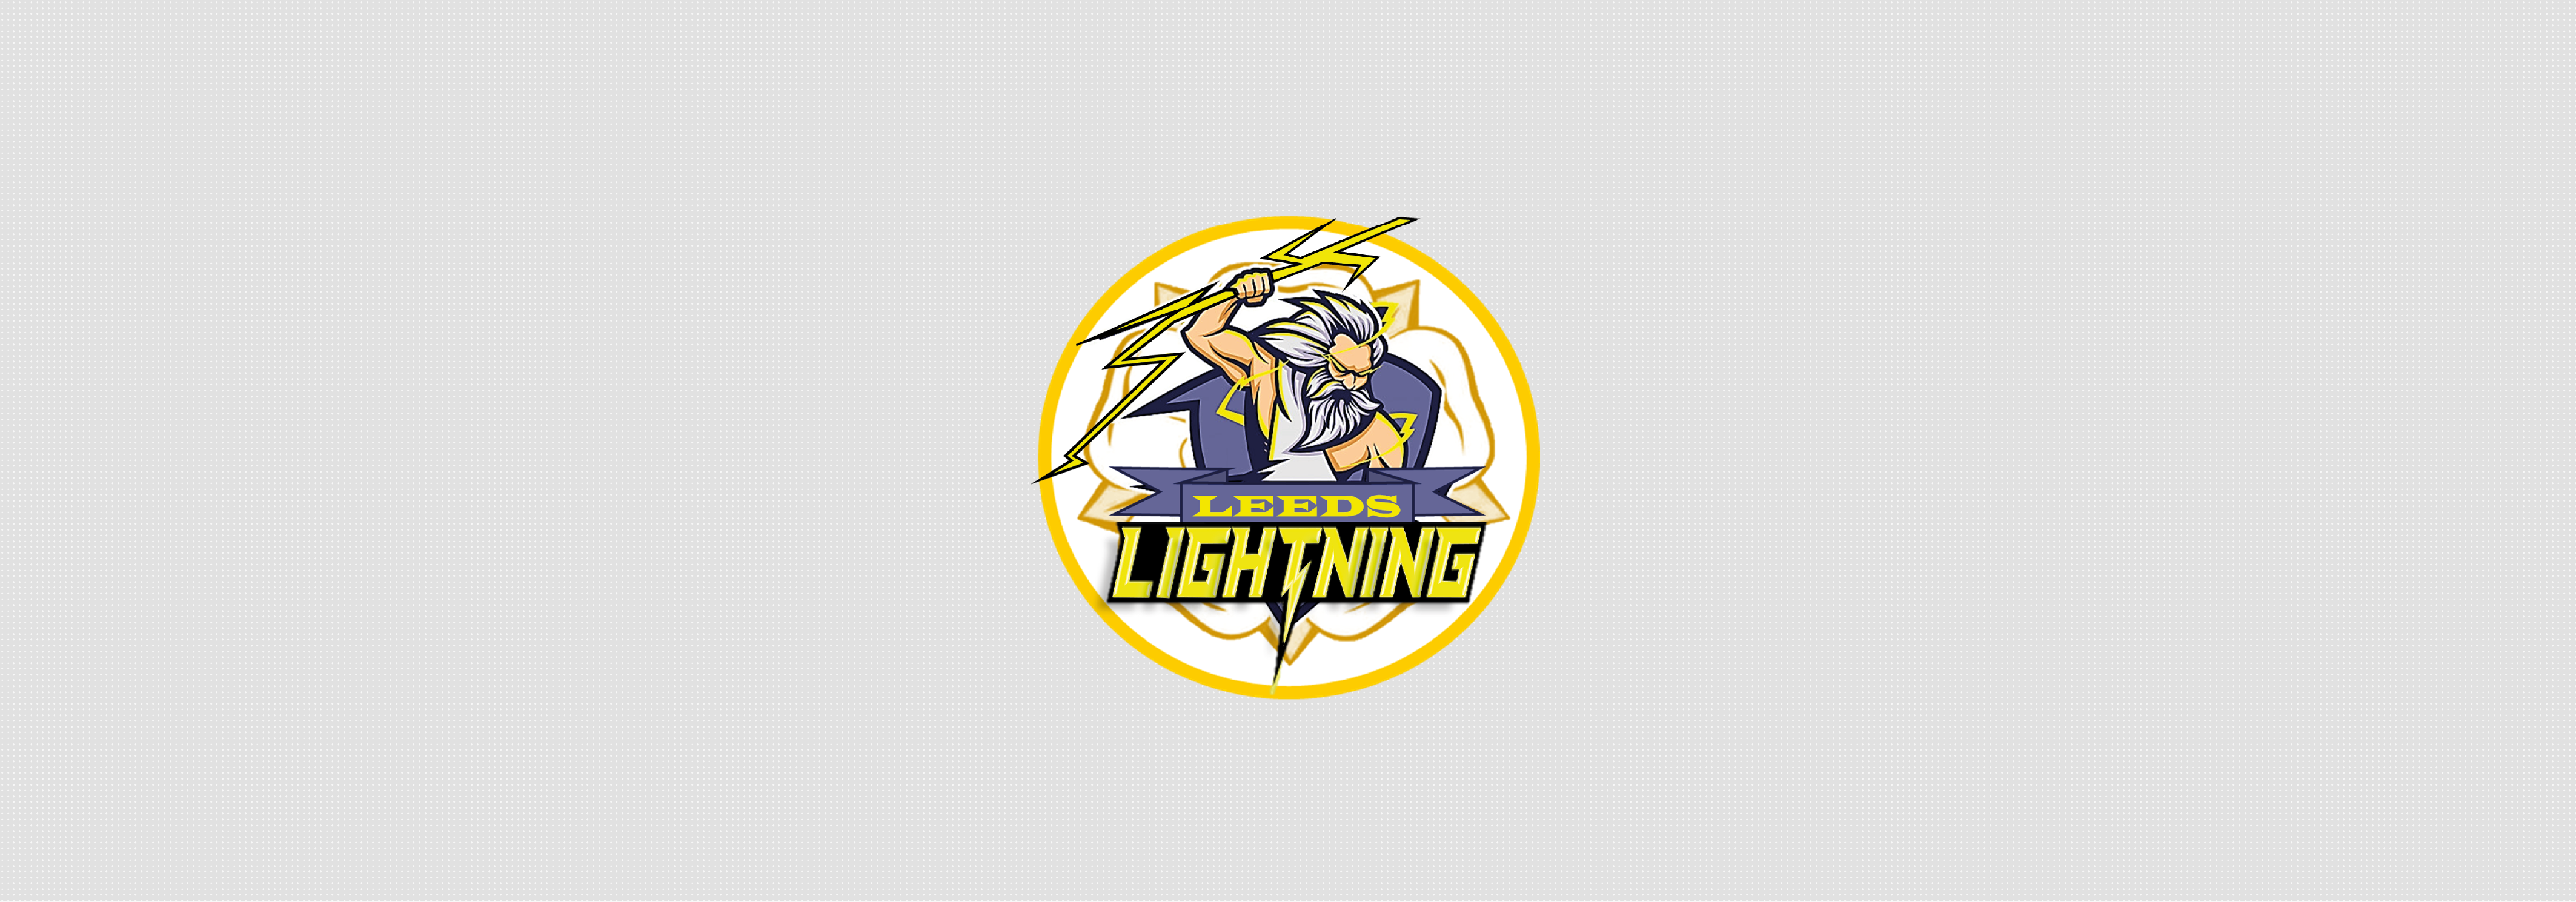 Leeds Lightning